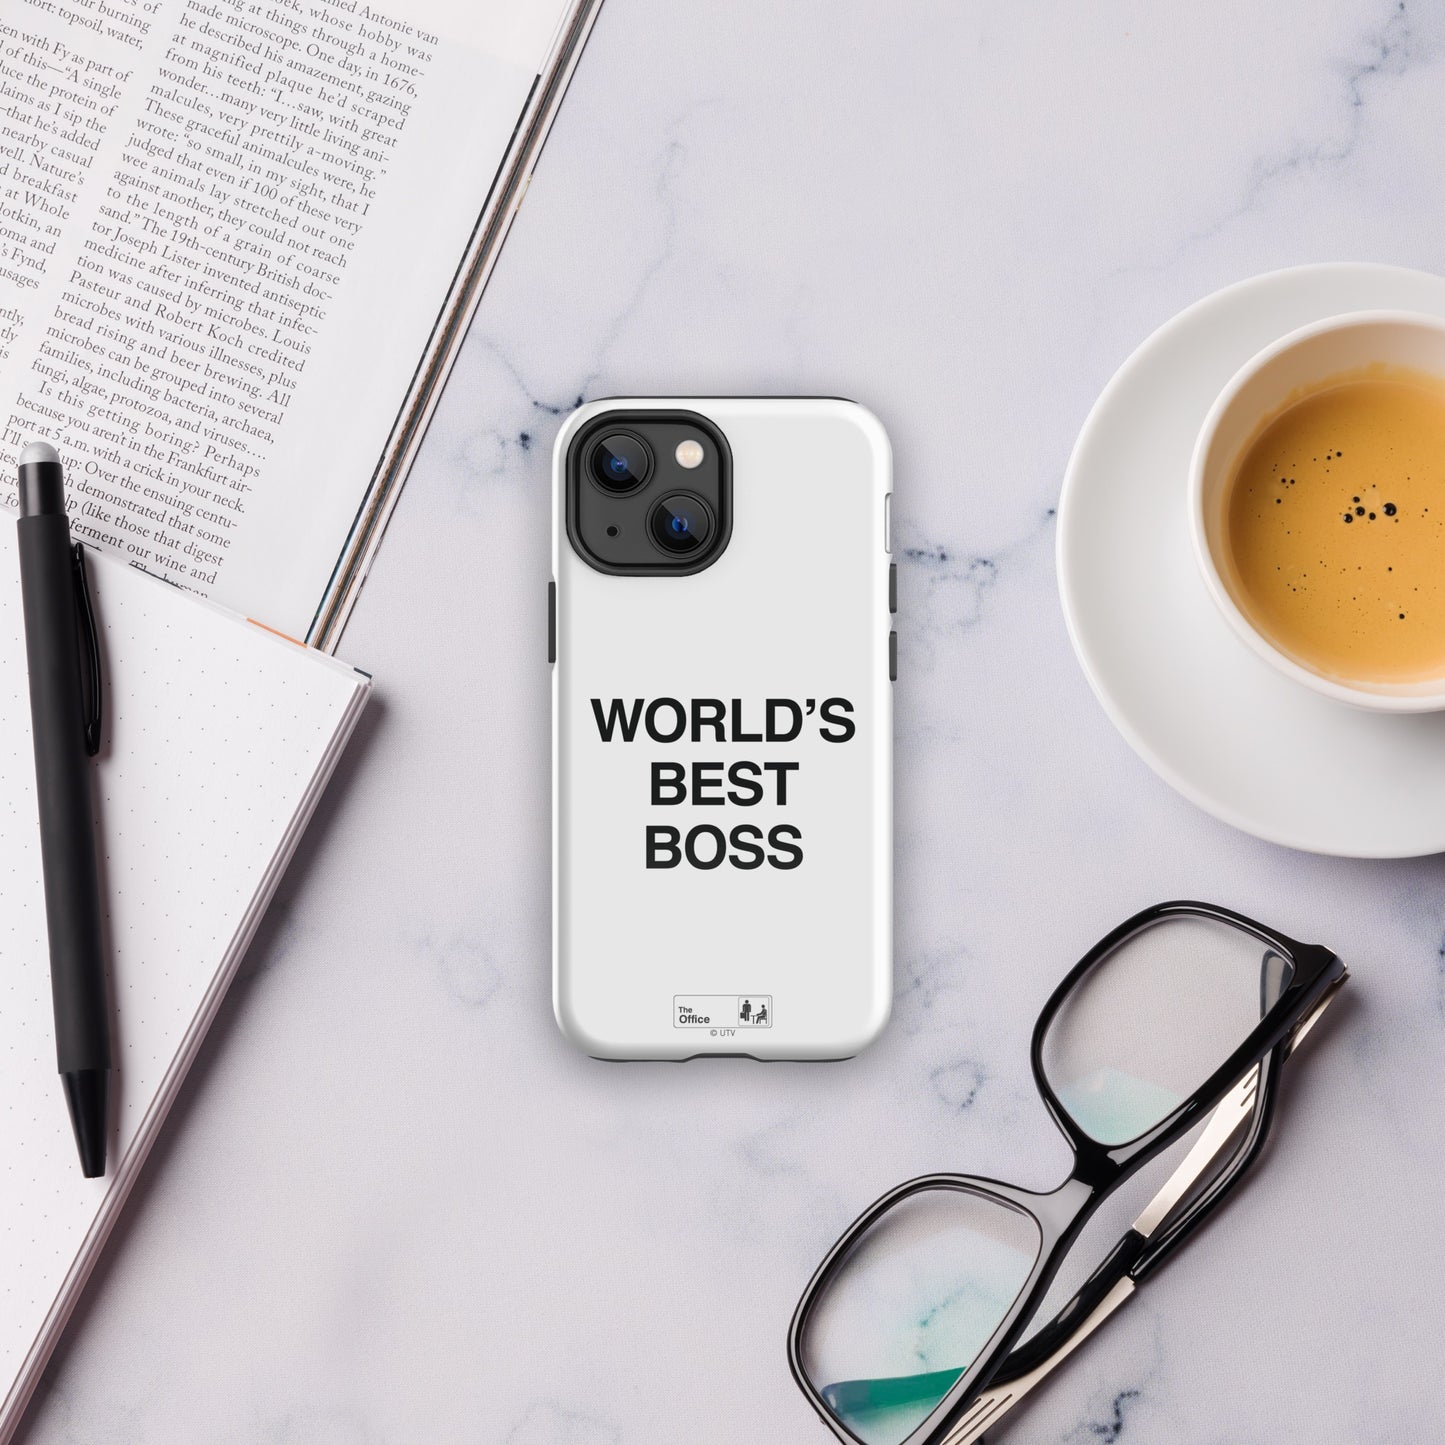 The Office World's Best Boss Tough Phone Case - iPhone